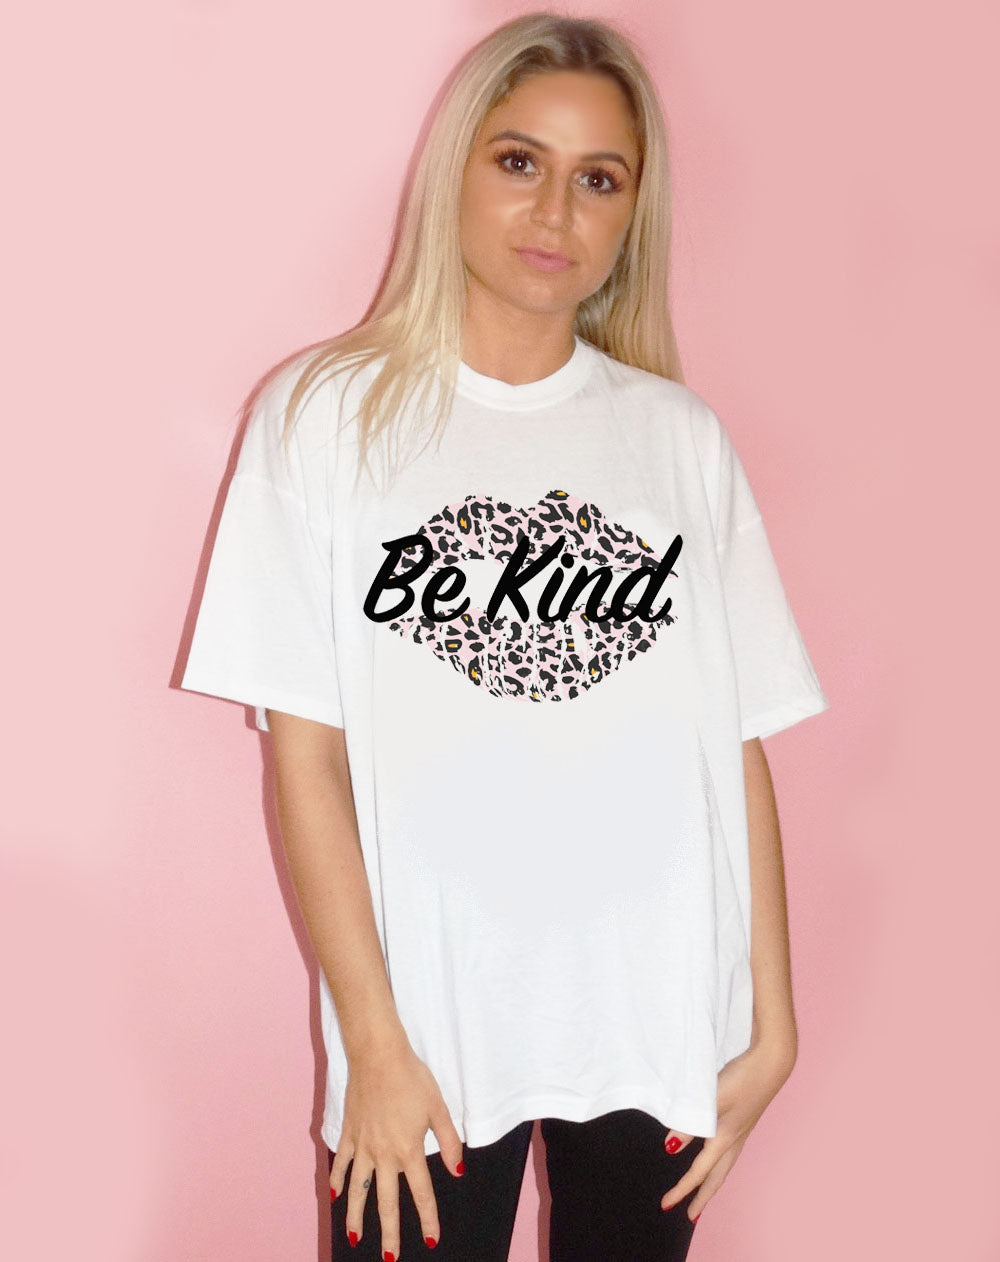 White Tshirt with Be Kind Slogan & Pink/Orange Leopard Kiss